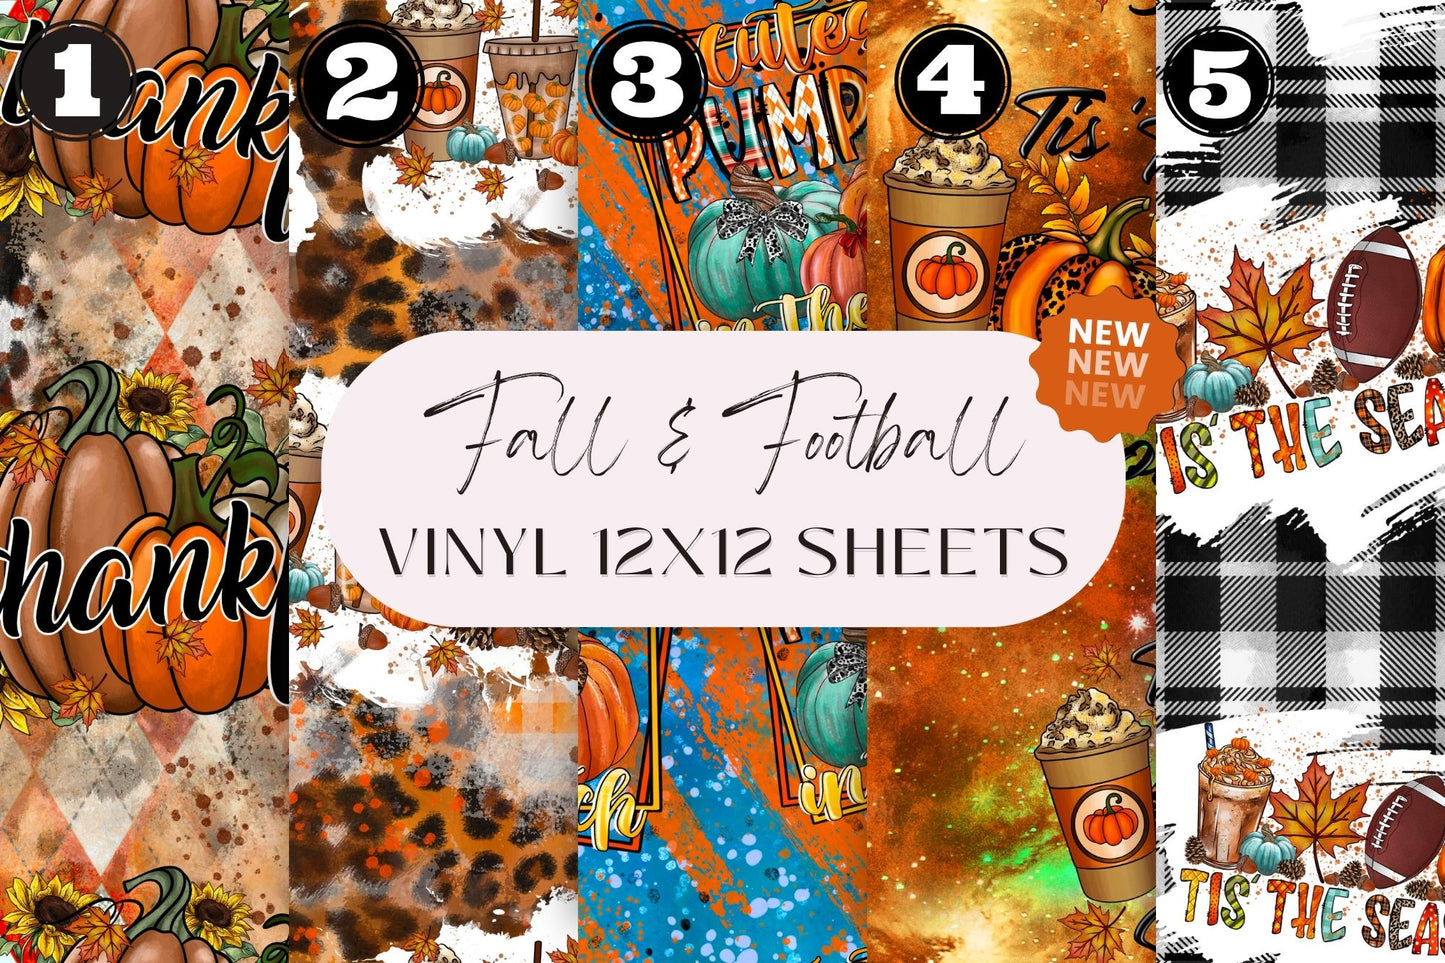 Fall & Football 12x12 Vinyl collection- 5 Designs